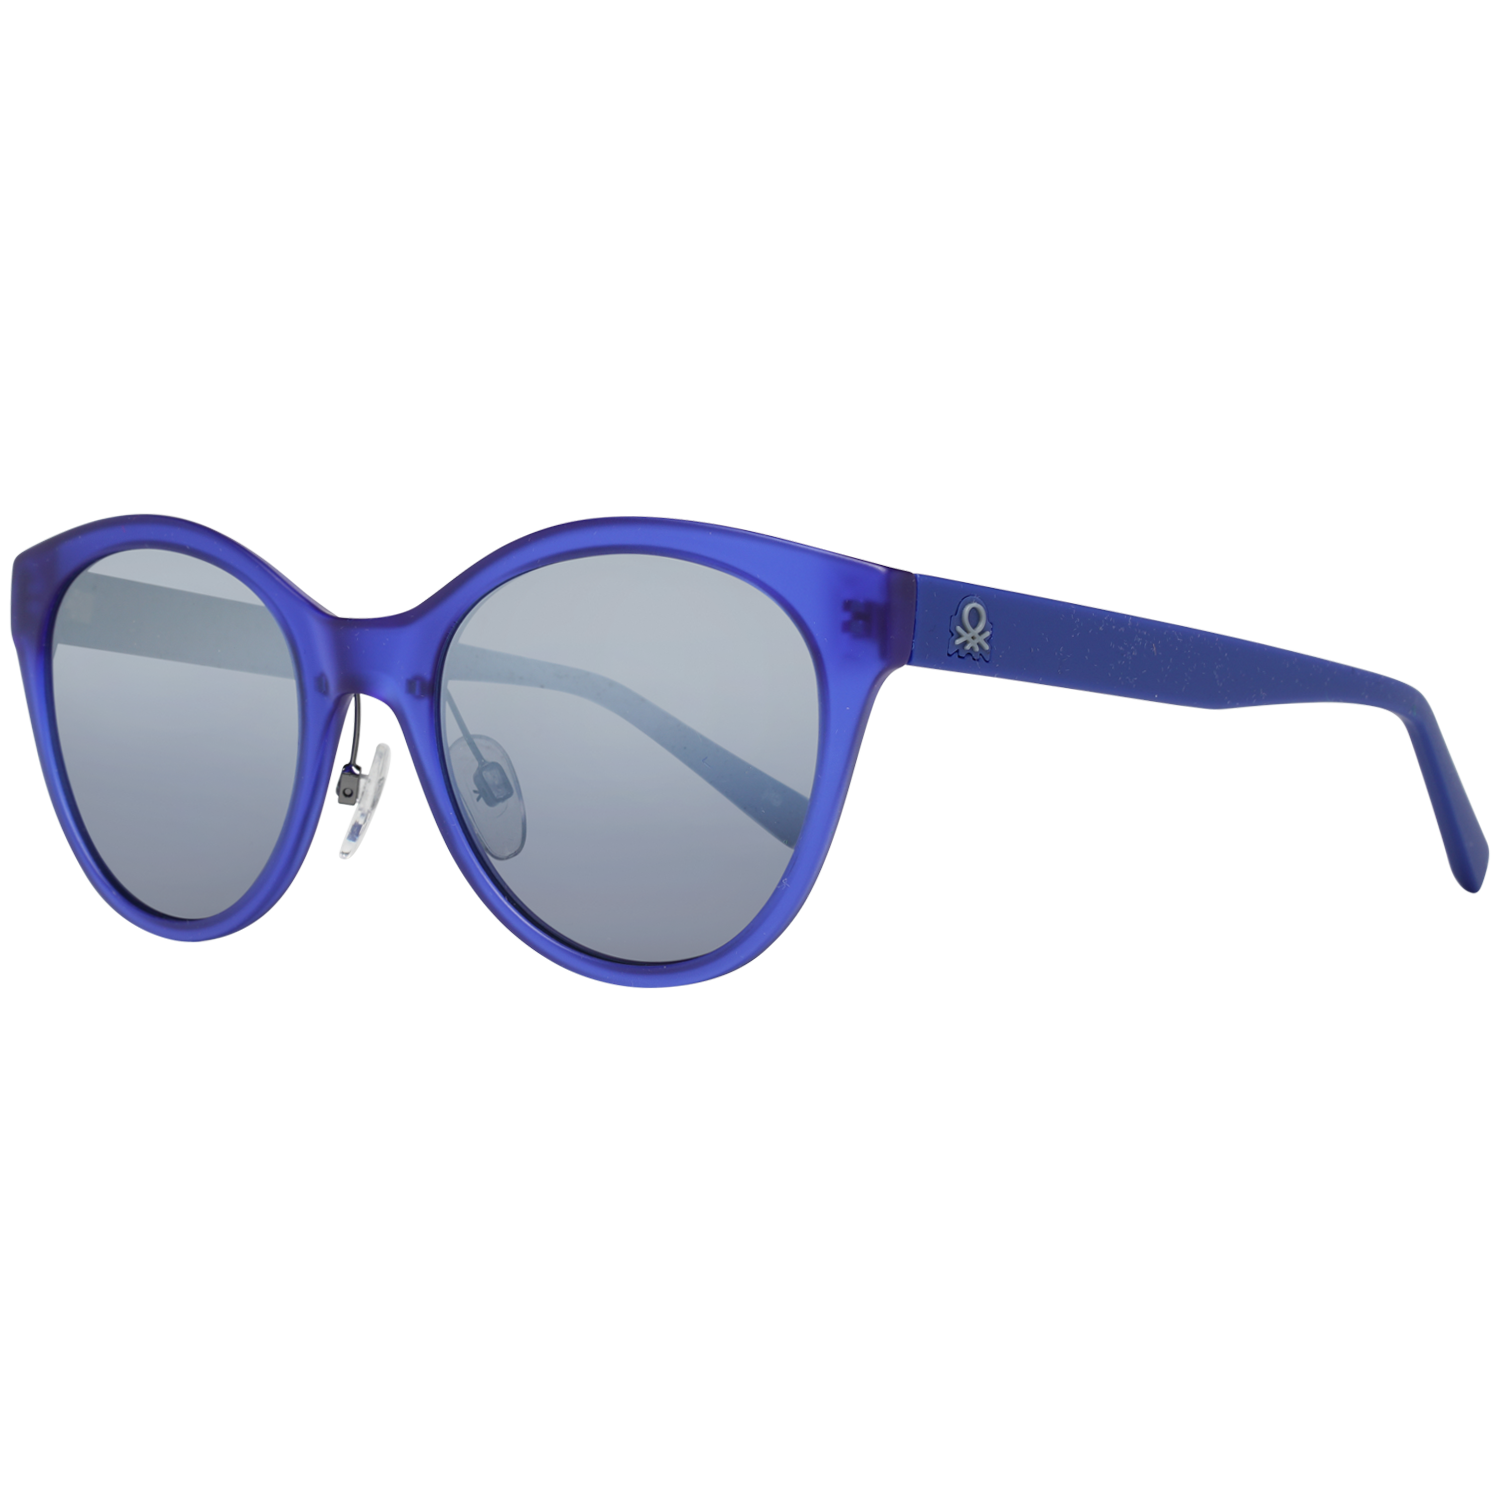 Benetton Sunglasses BE5008 603 53 Blue